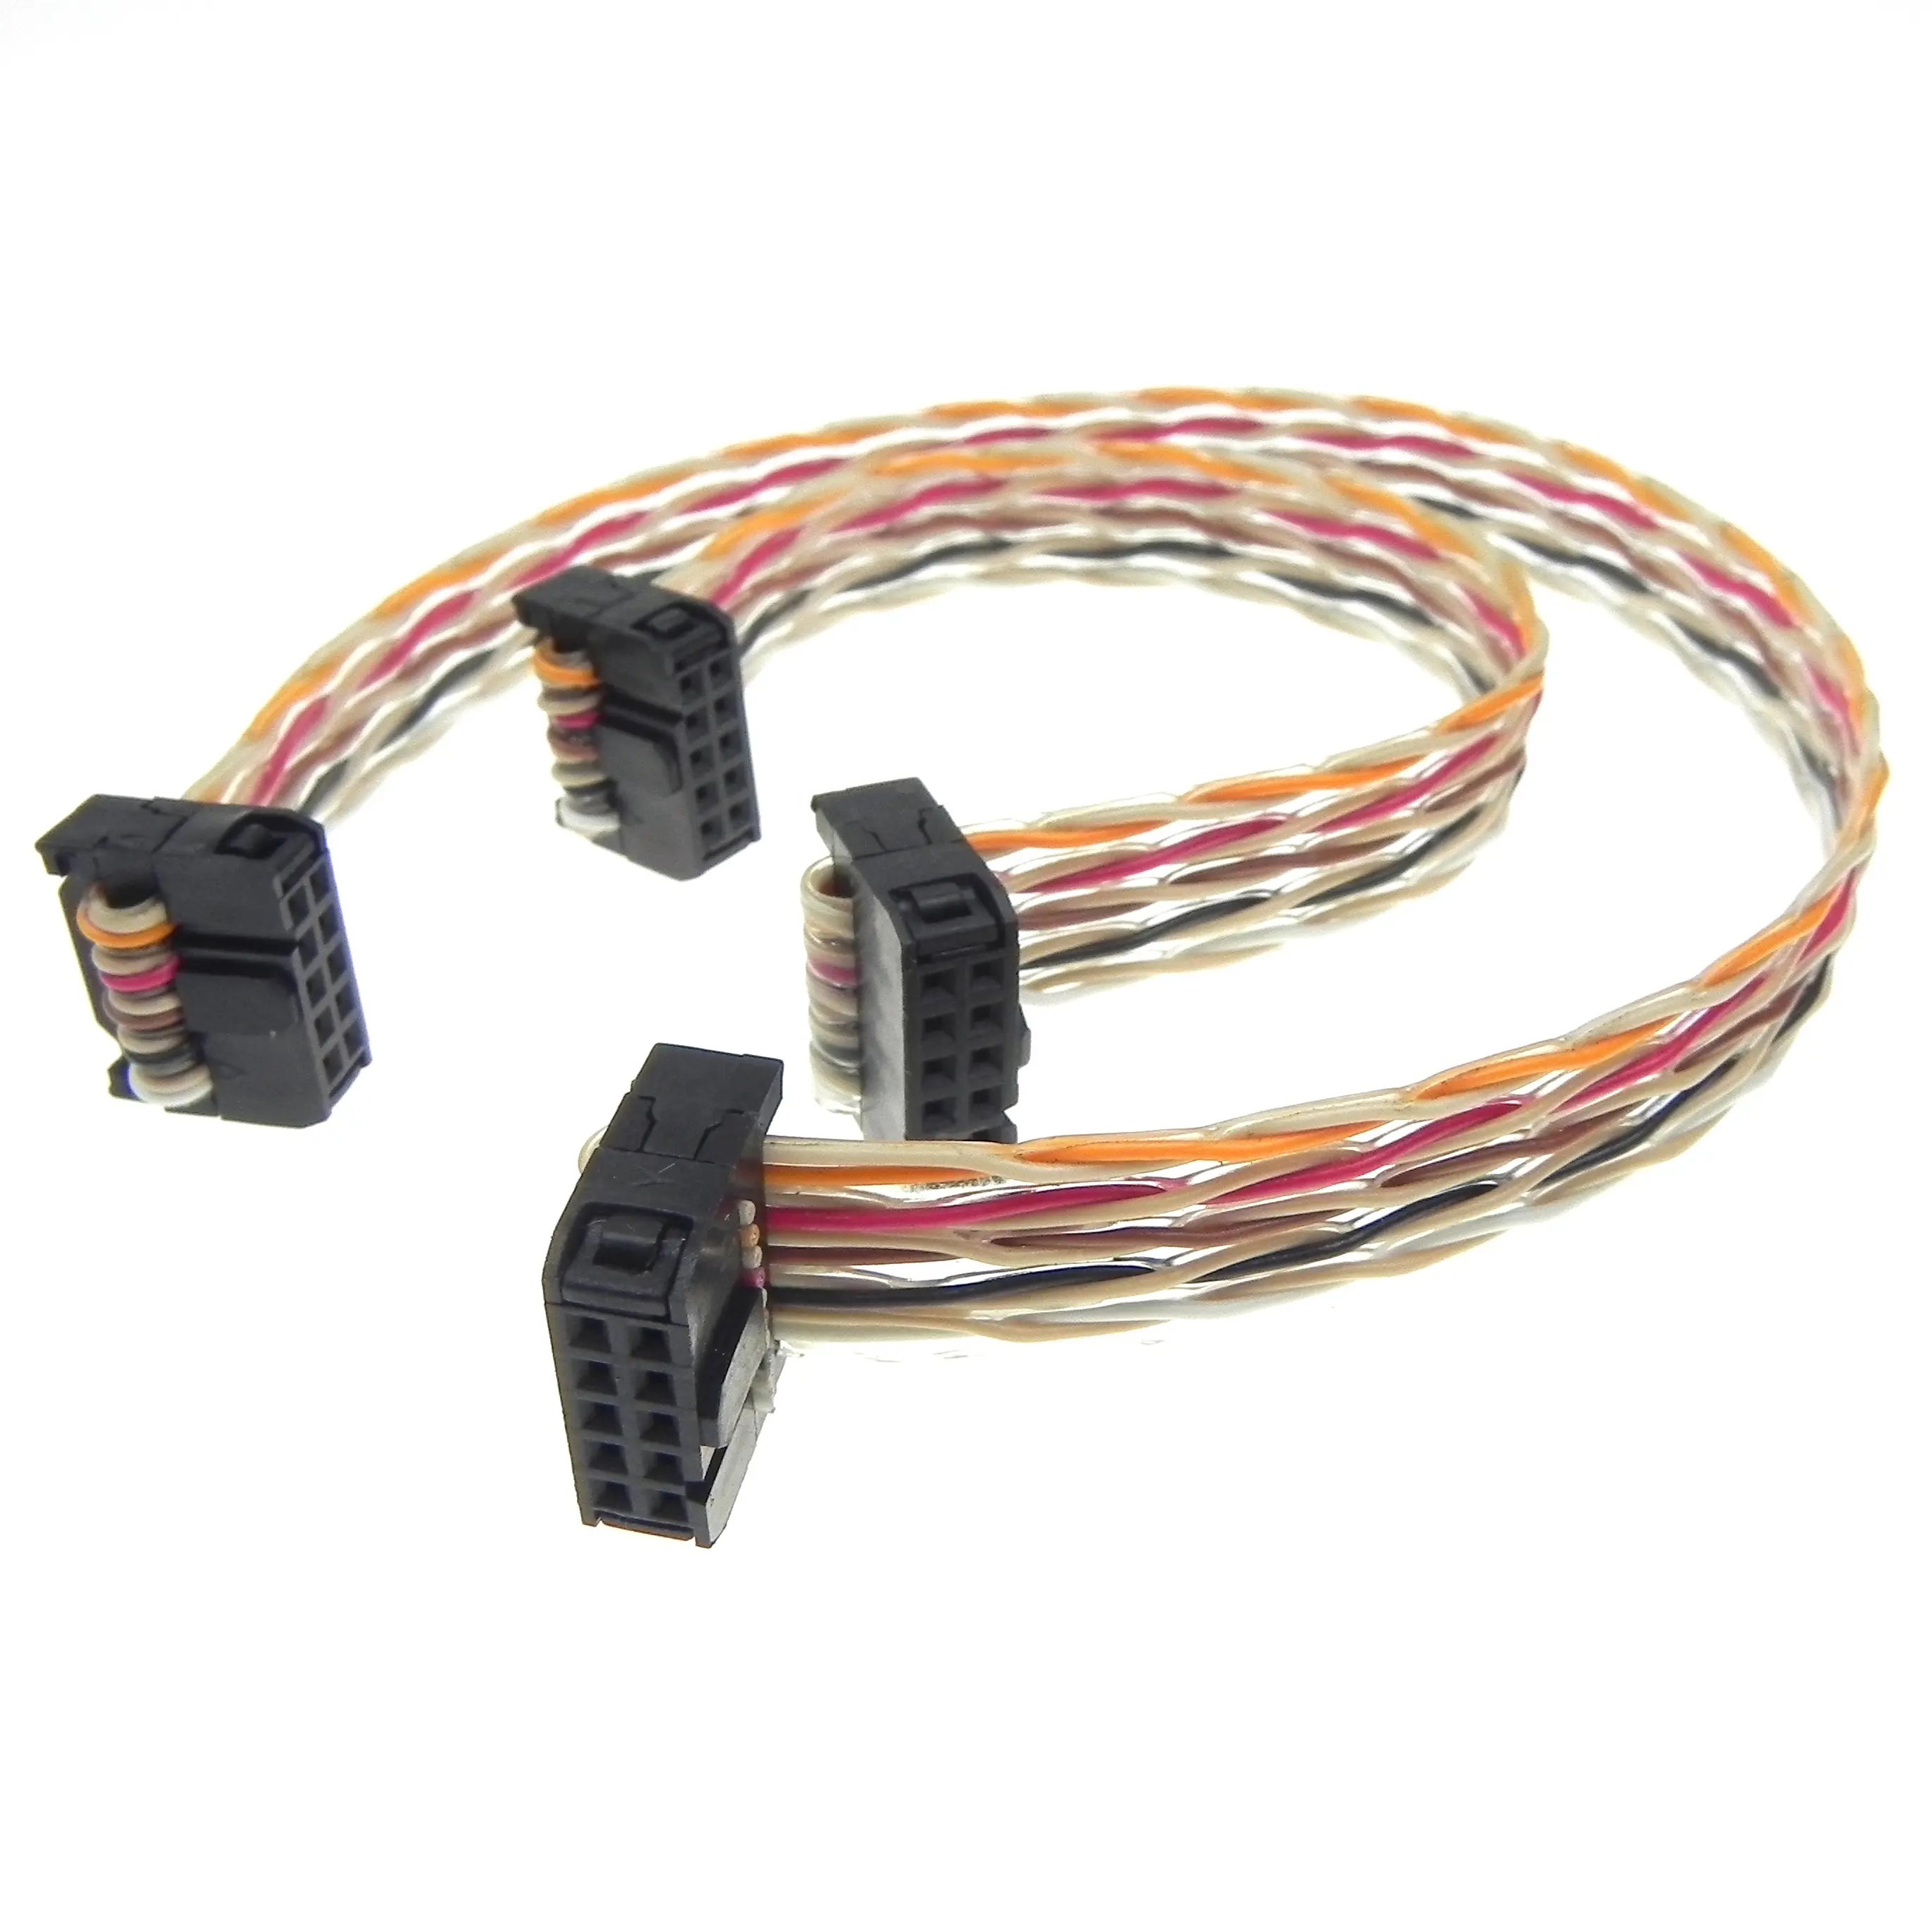 24awg 2mm pitch 10 tel idc düz bükümlü çift şerit flex kablo ile idc header